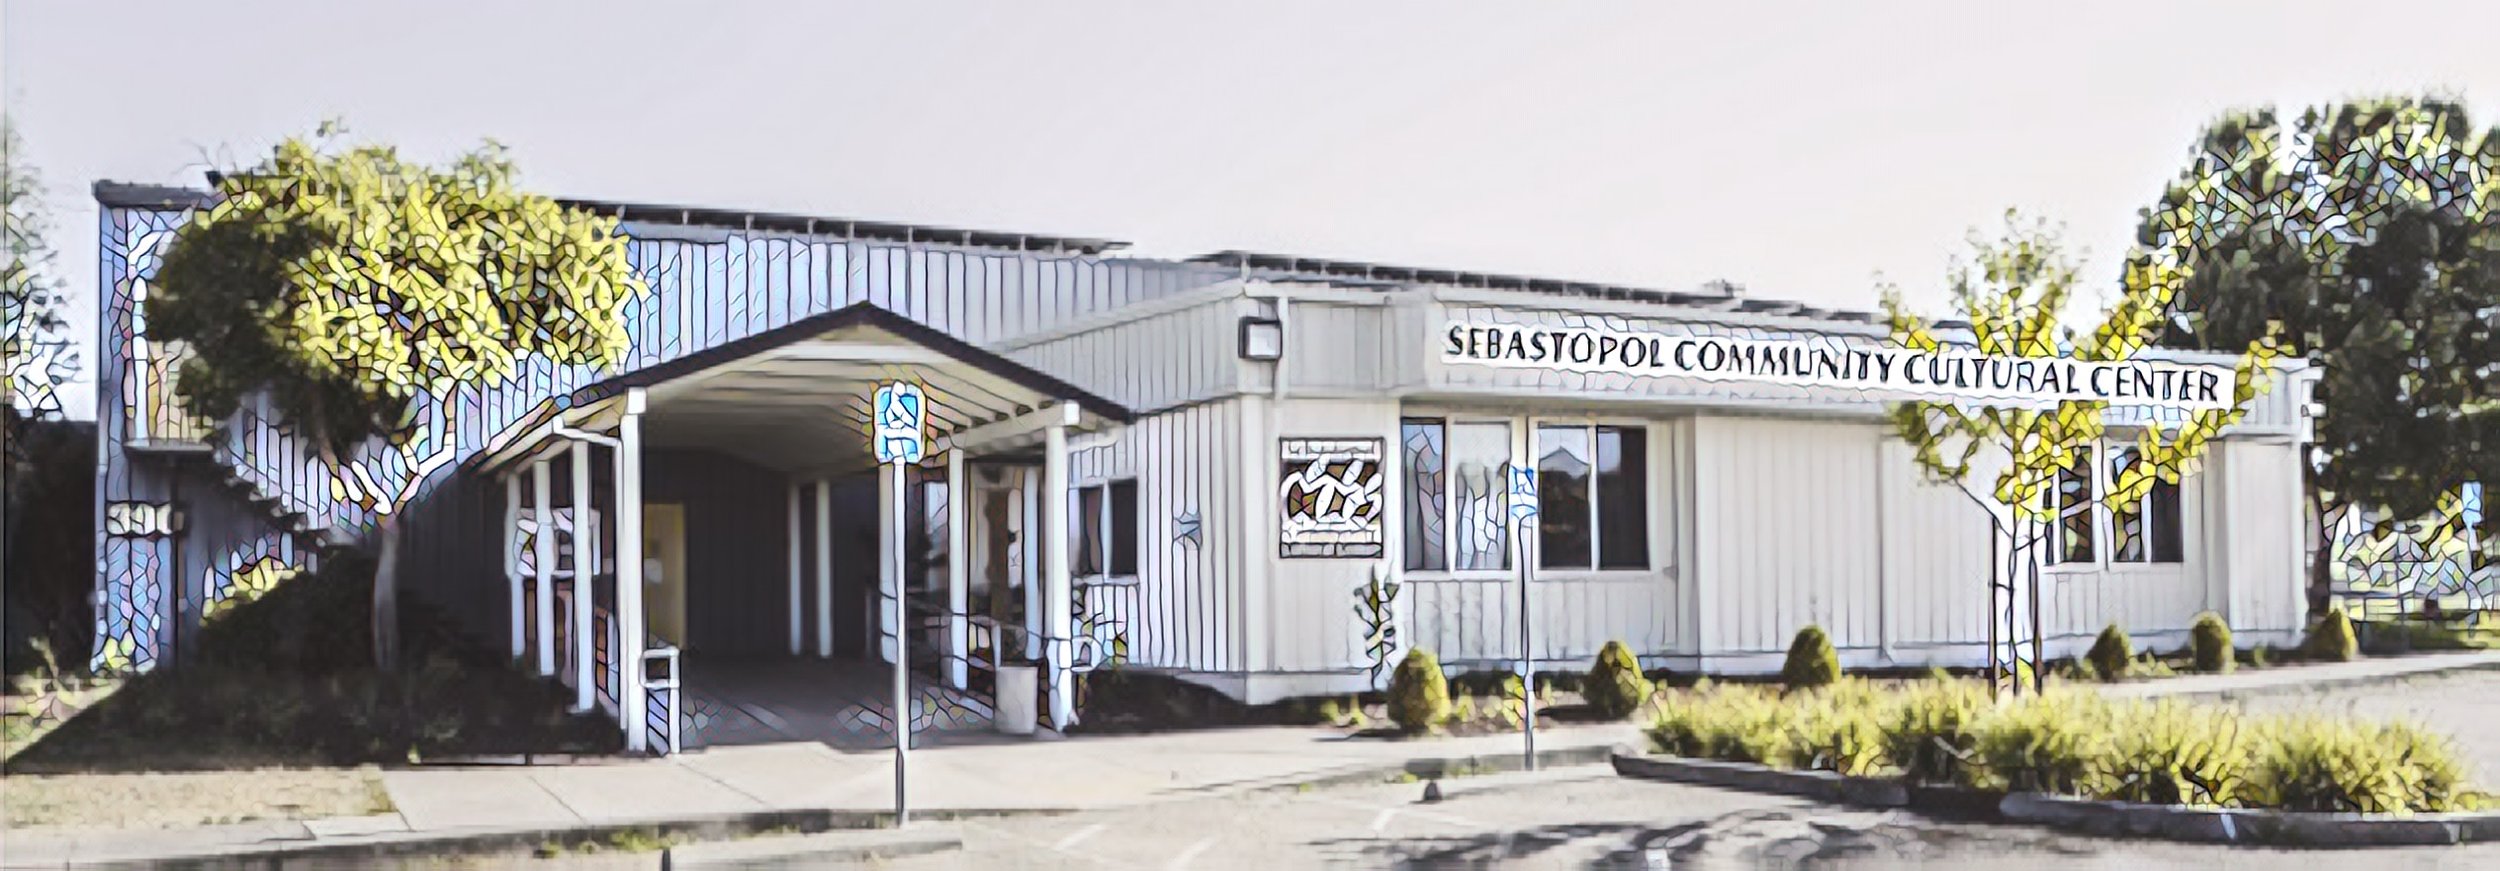 Sebastopol Community Cultural Center